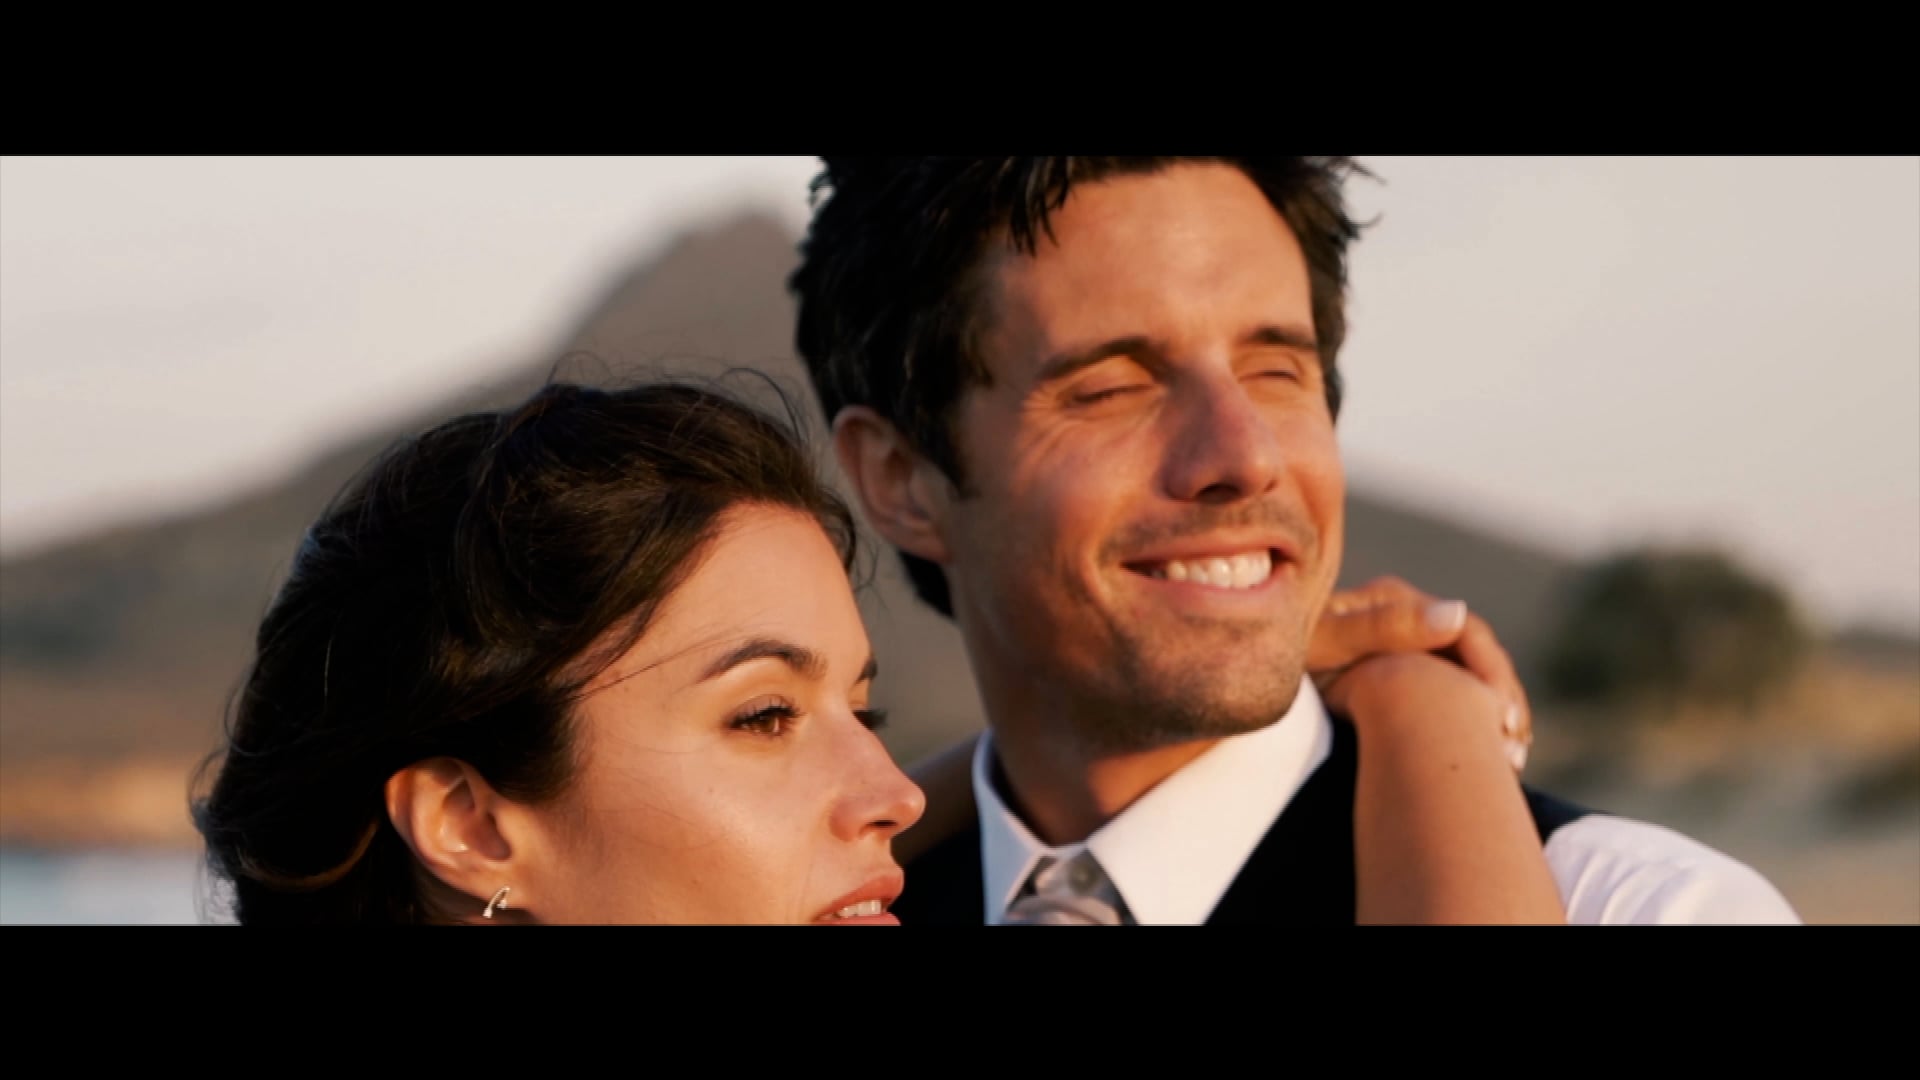 Paros wedding cinematography! 
Marianna & James